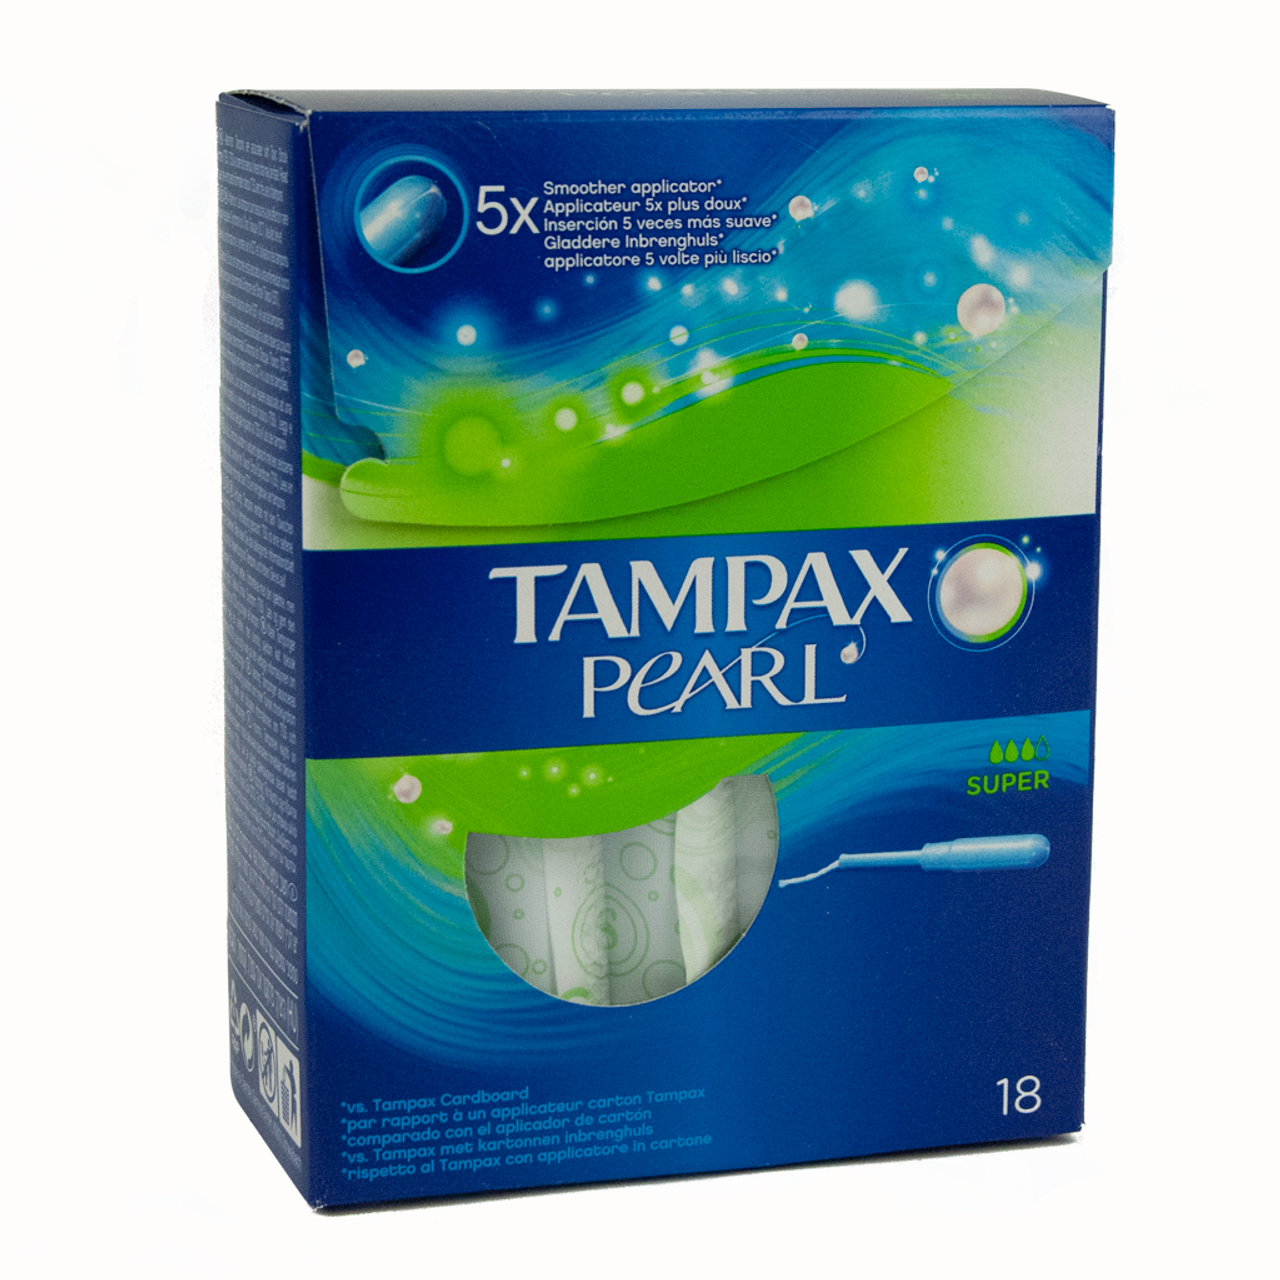 Tampax Pearl 50 Tampons with Plastic Applicator, Regular